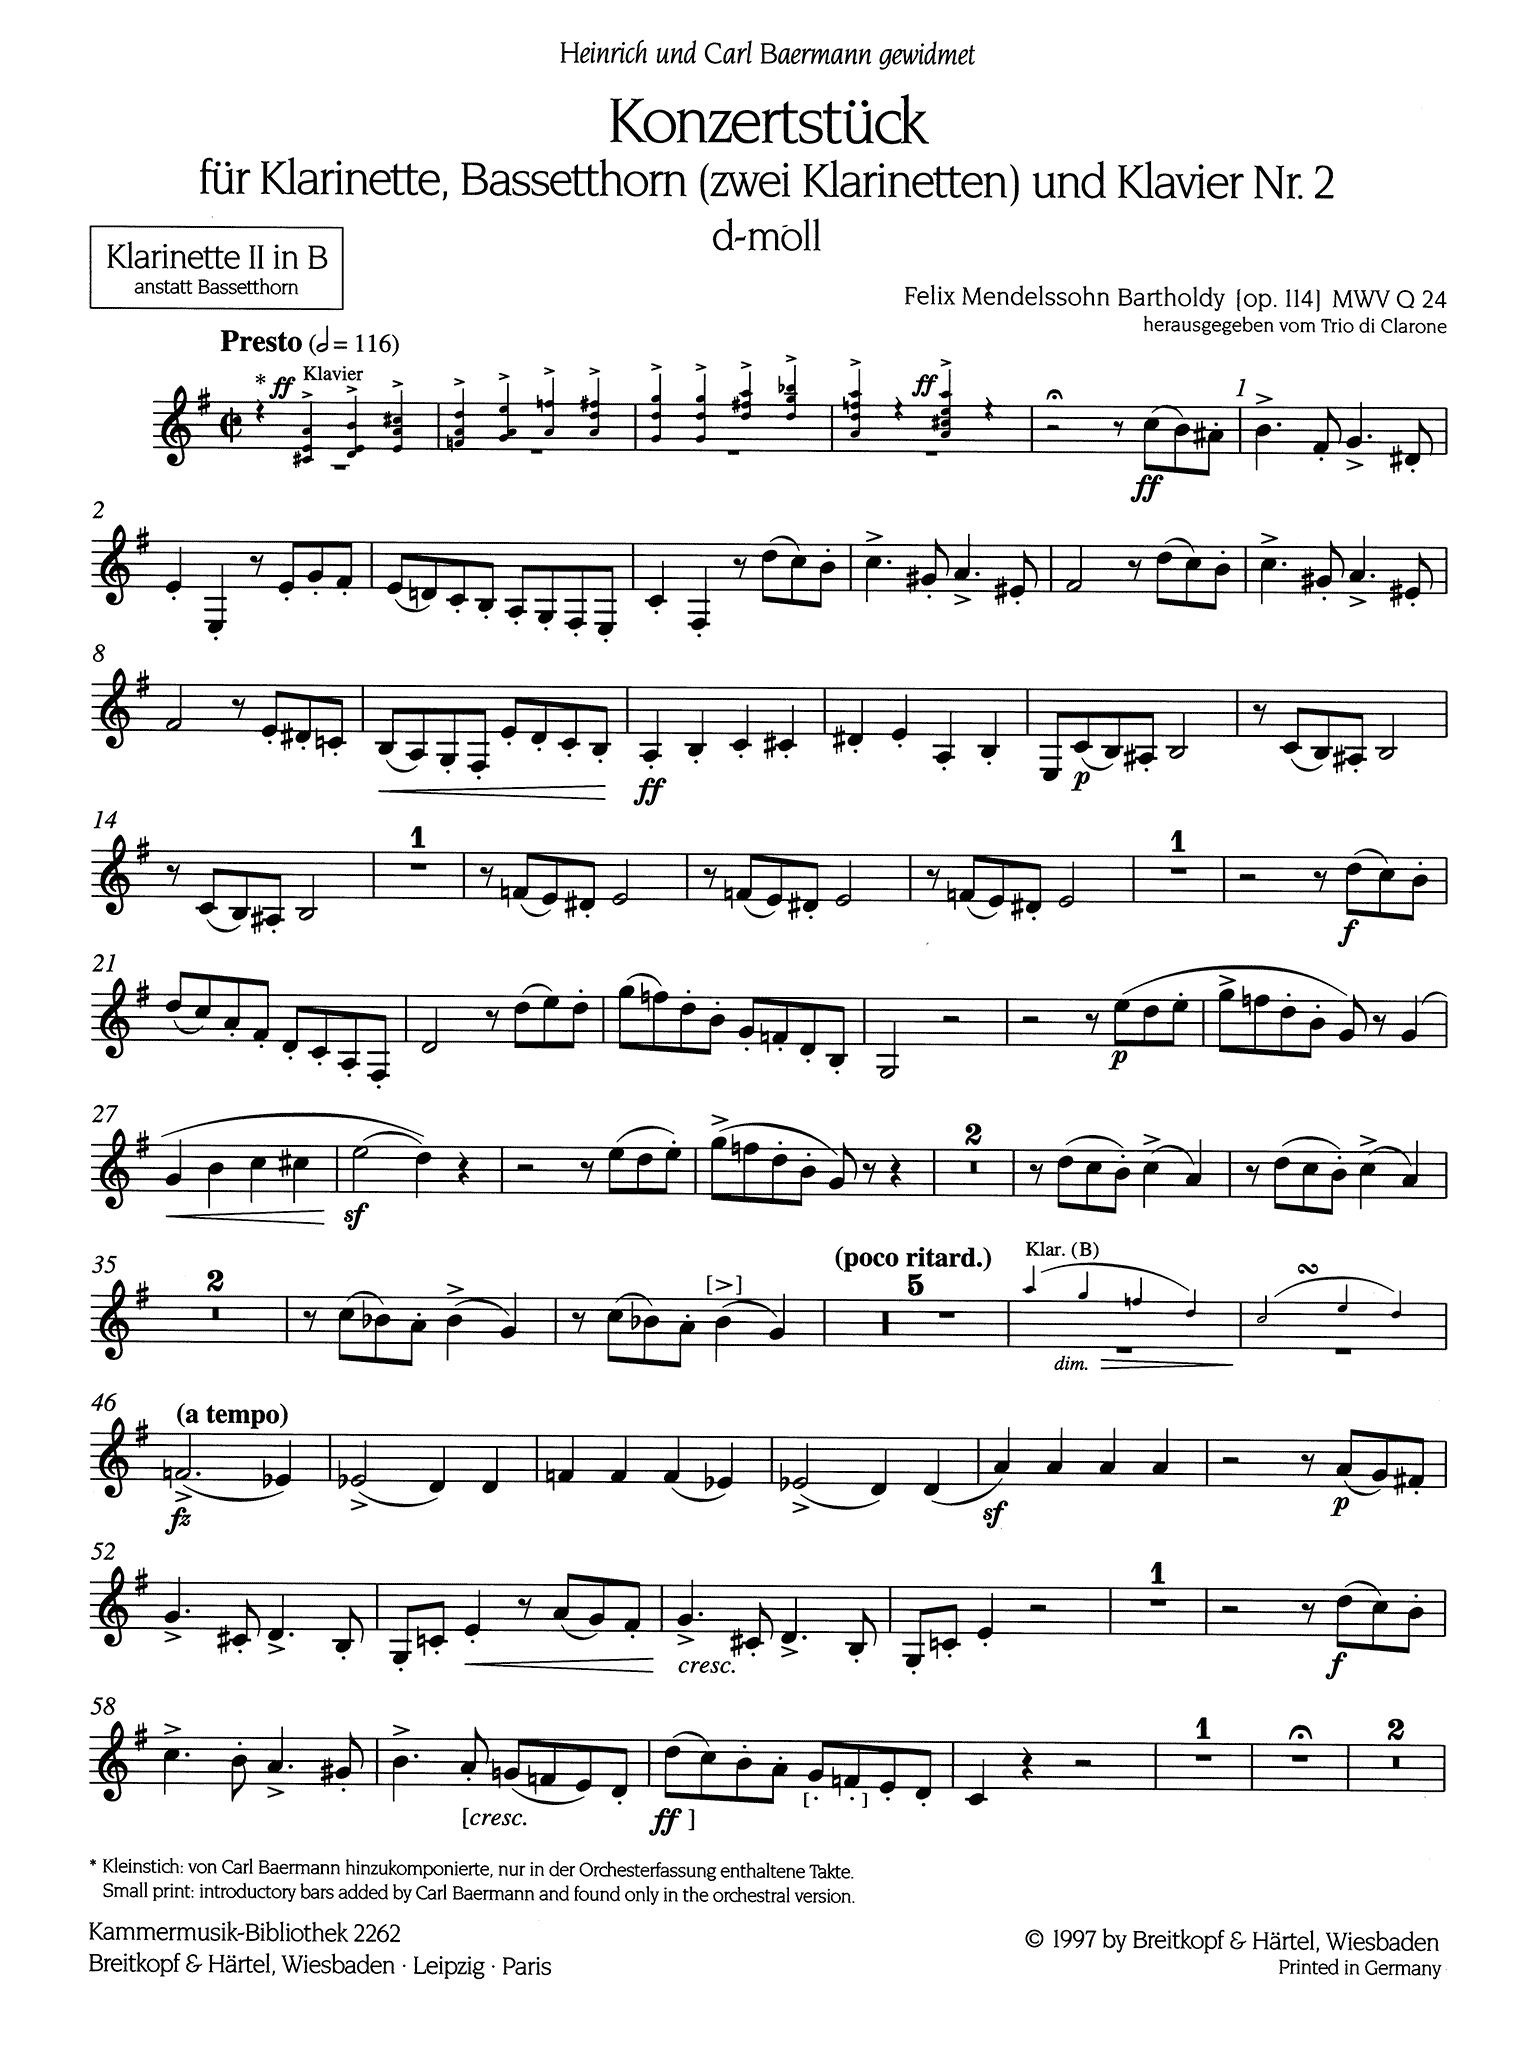 Concertpiece No. 2 in D Minor, Op. 114 B-flat Clarinet second solo part